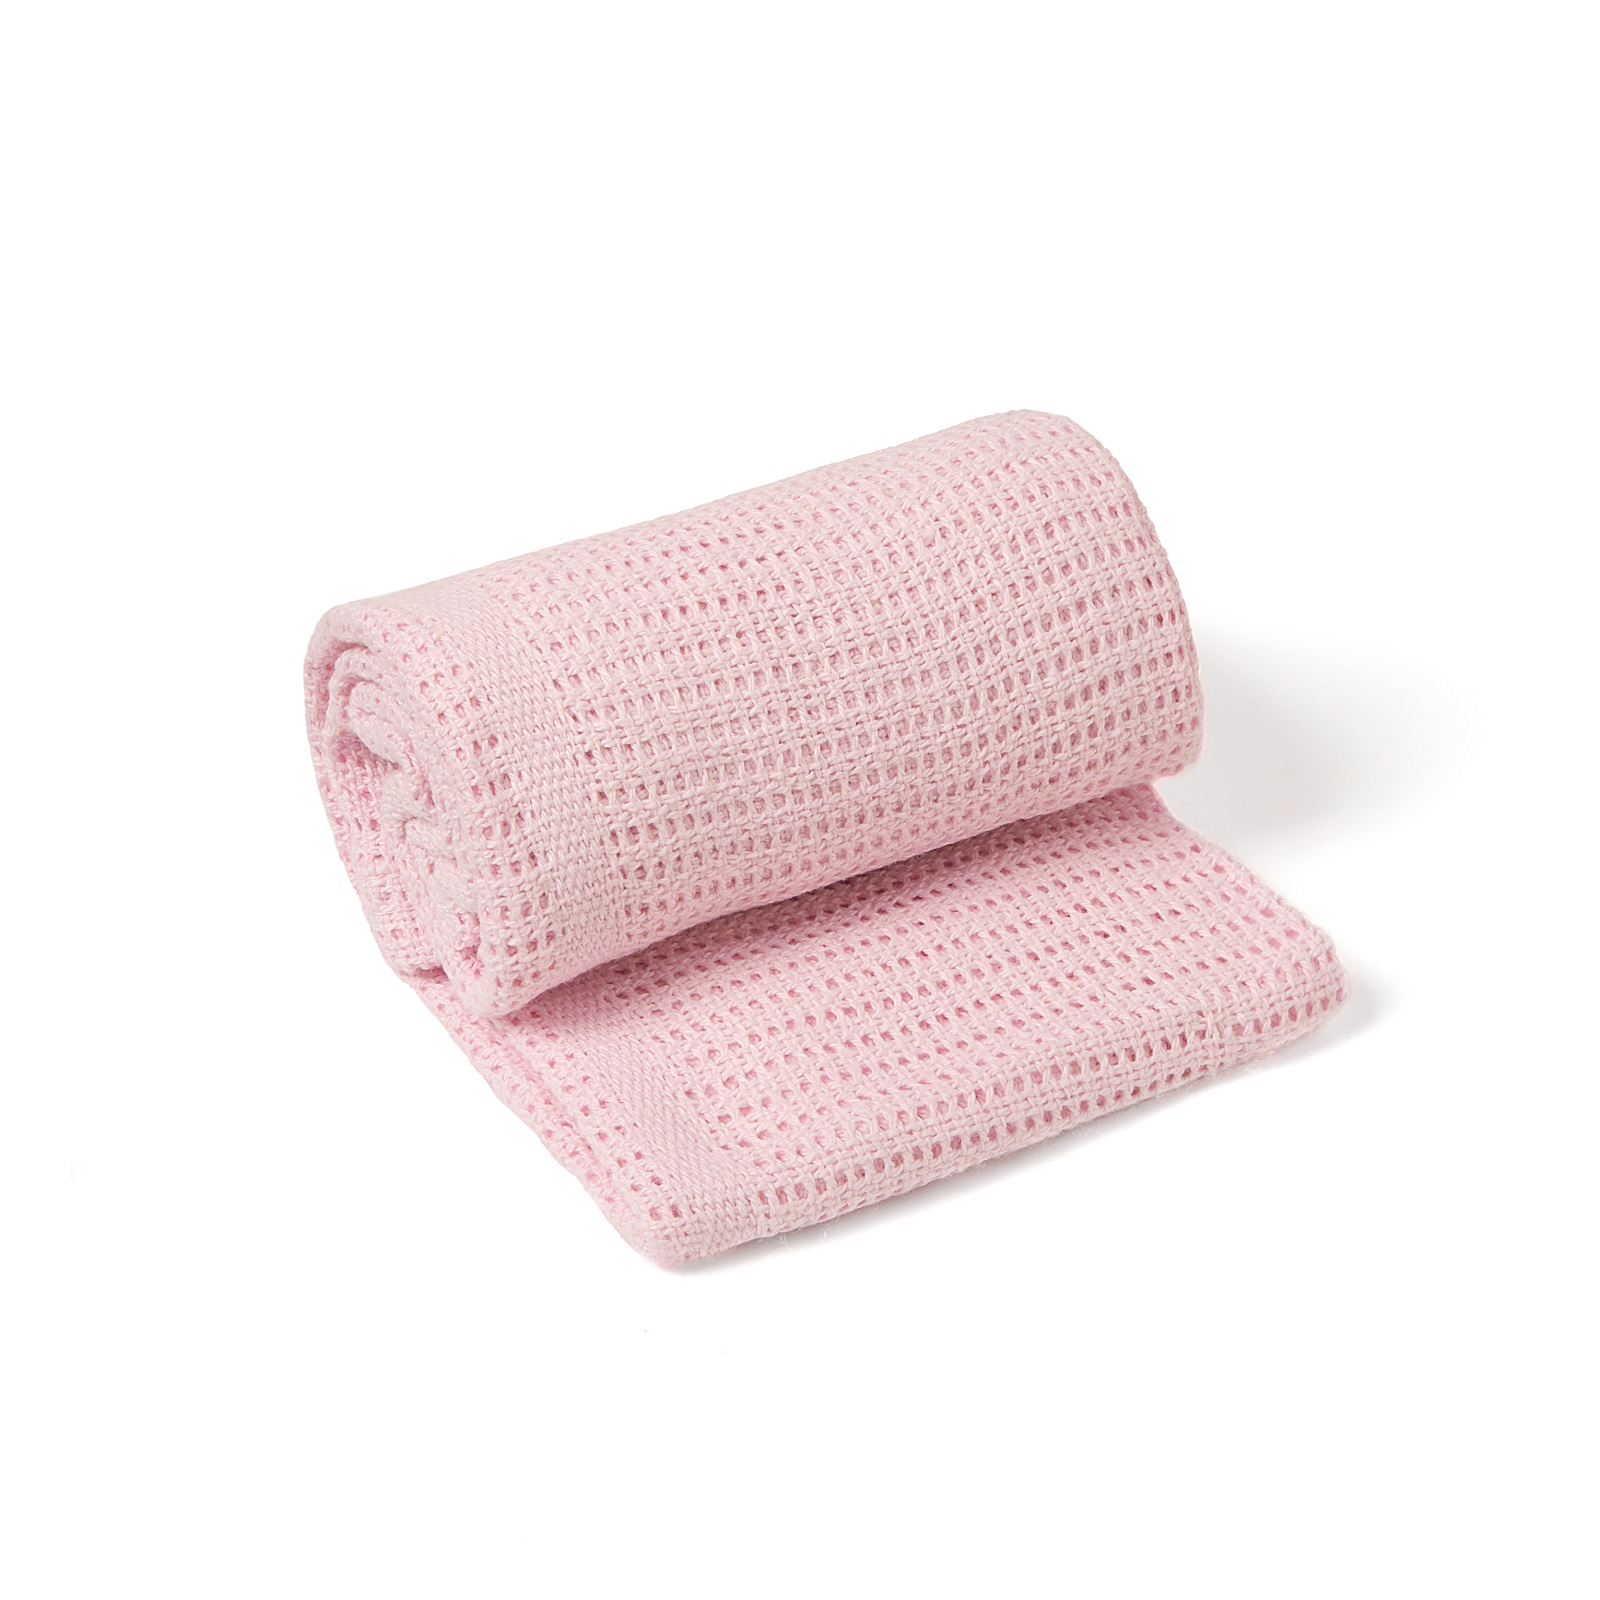 Soft Cotton Pram/Moses Basket/Crib Cellular Blanket (2 Pack) - Pink